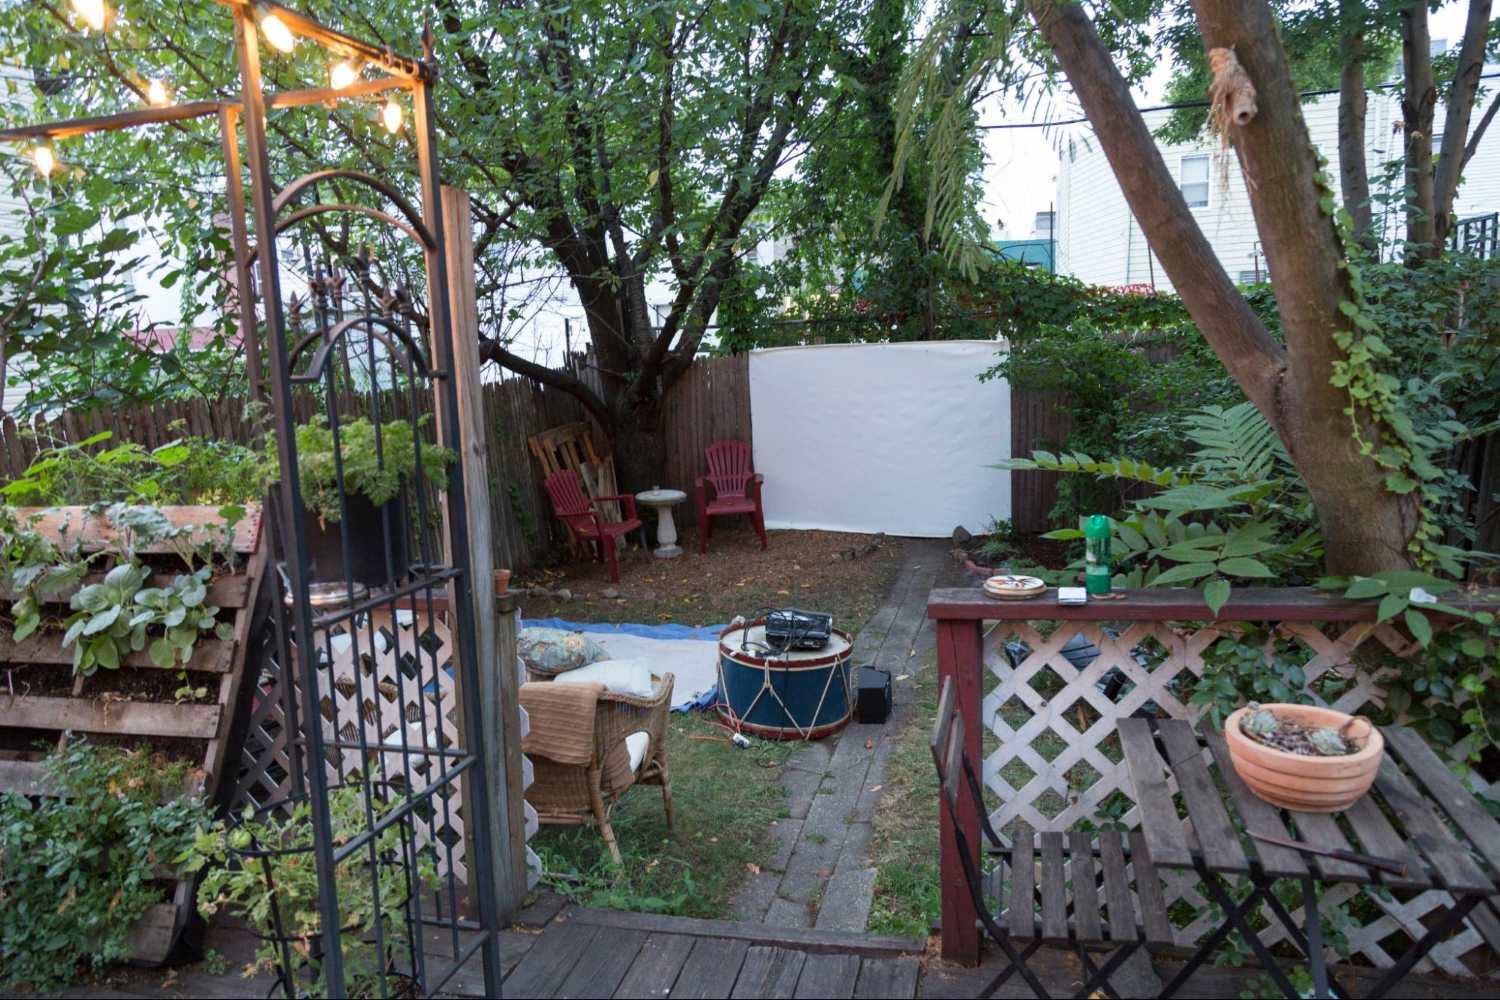 diy projector screen in backyard